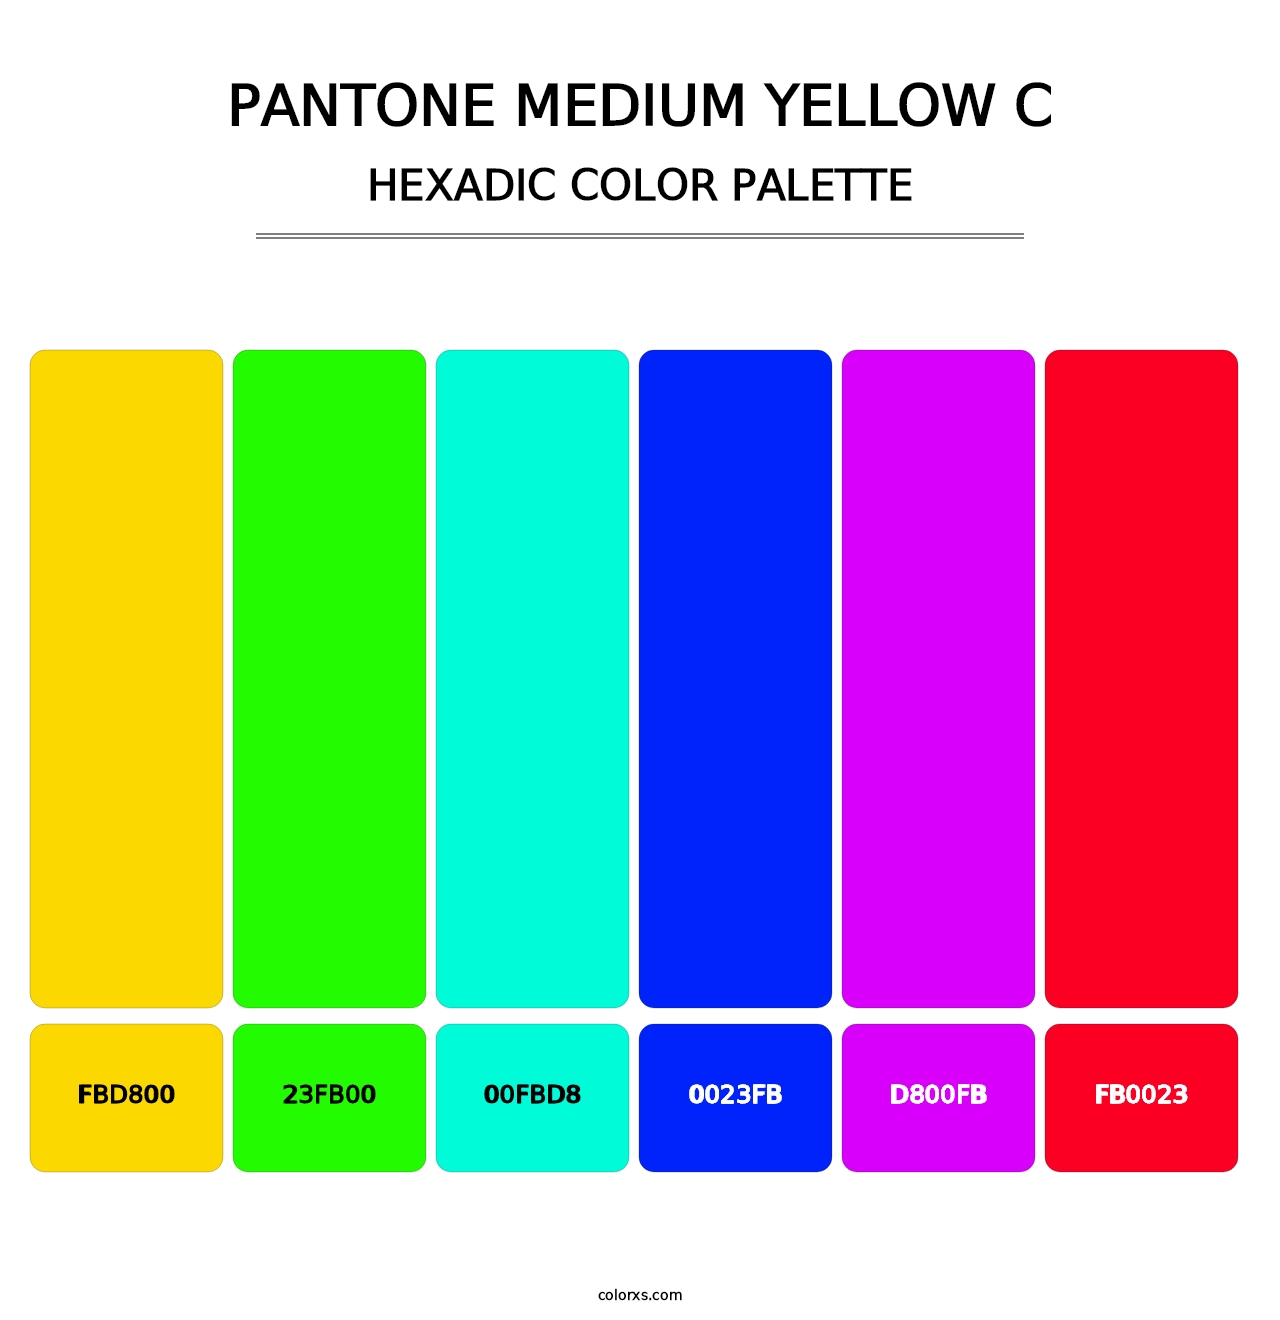 PANTONE Medium Yellow C - Hexadic Color Palette